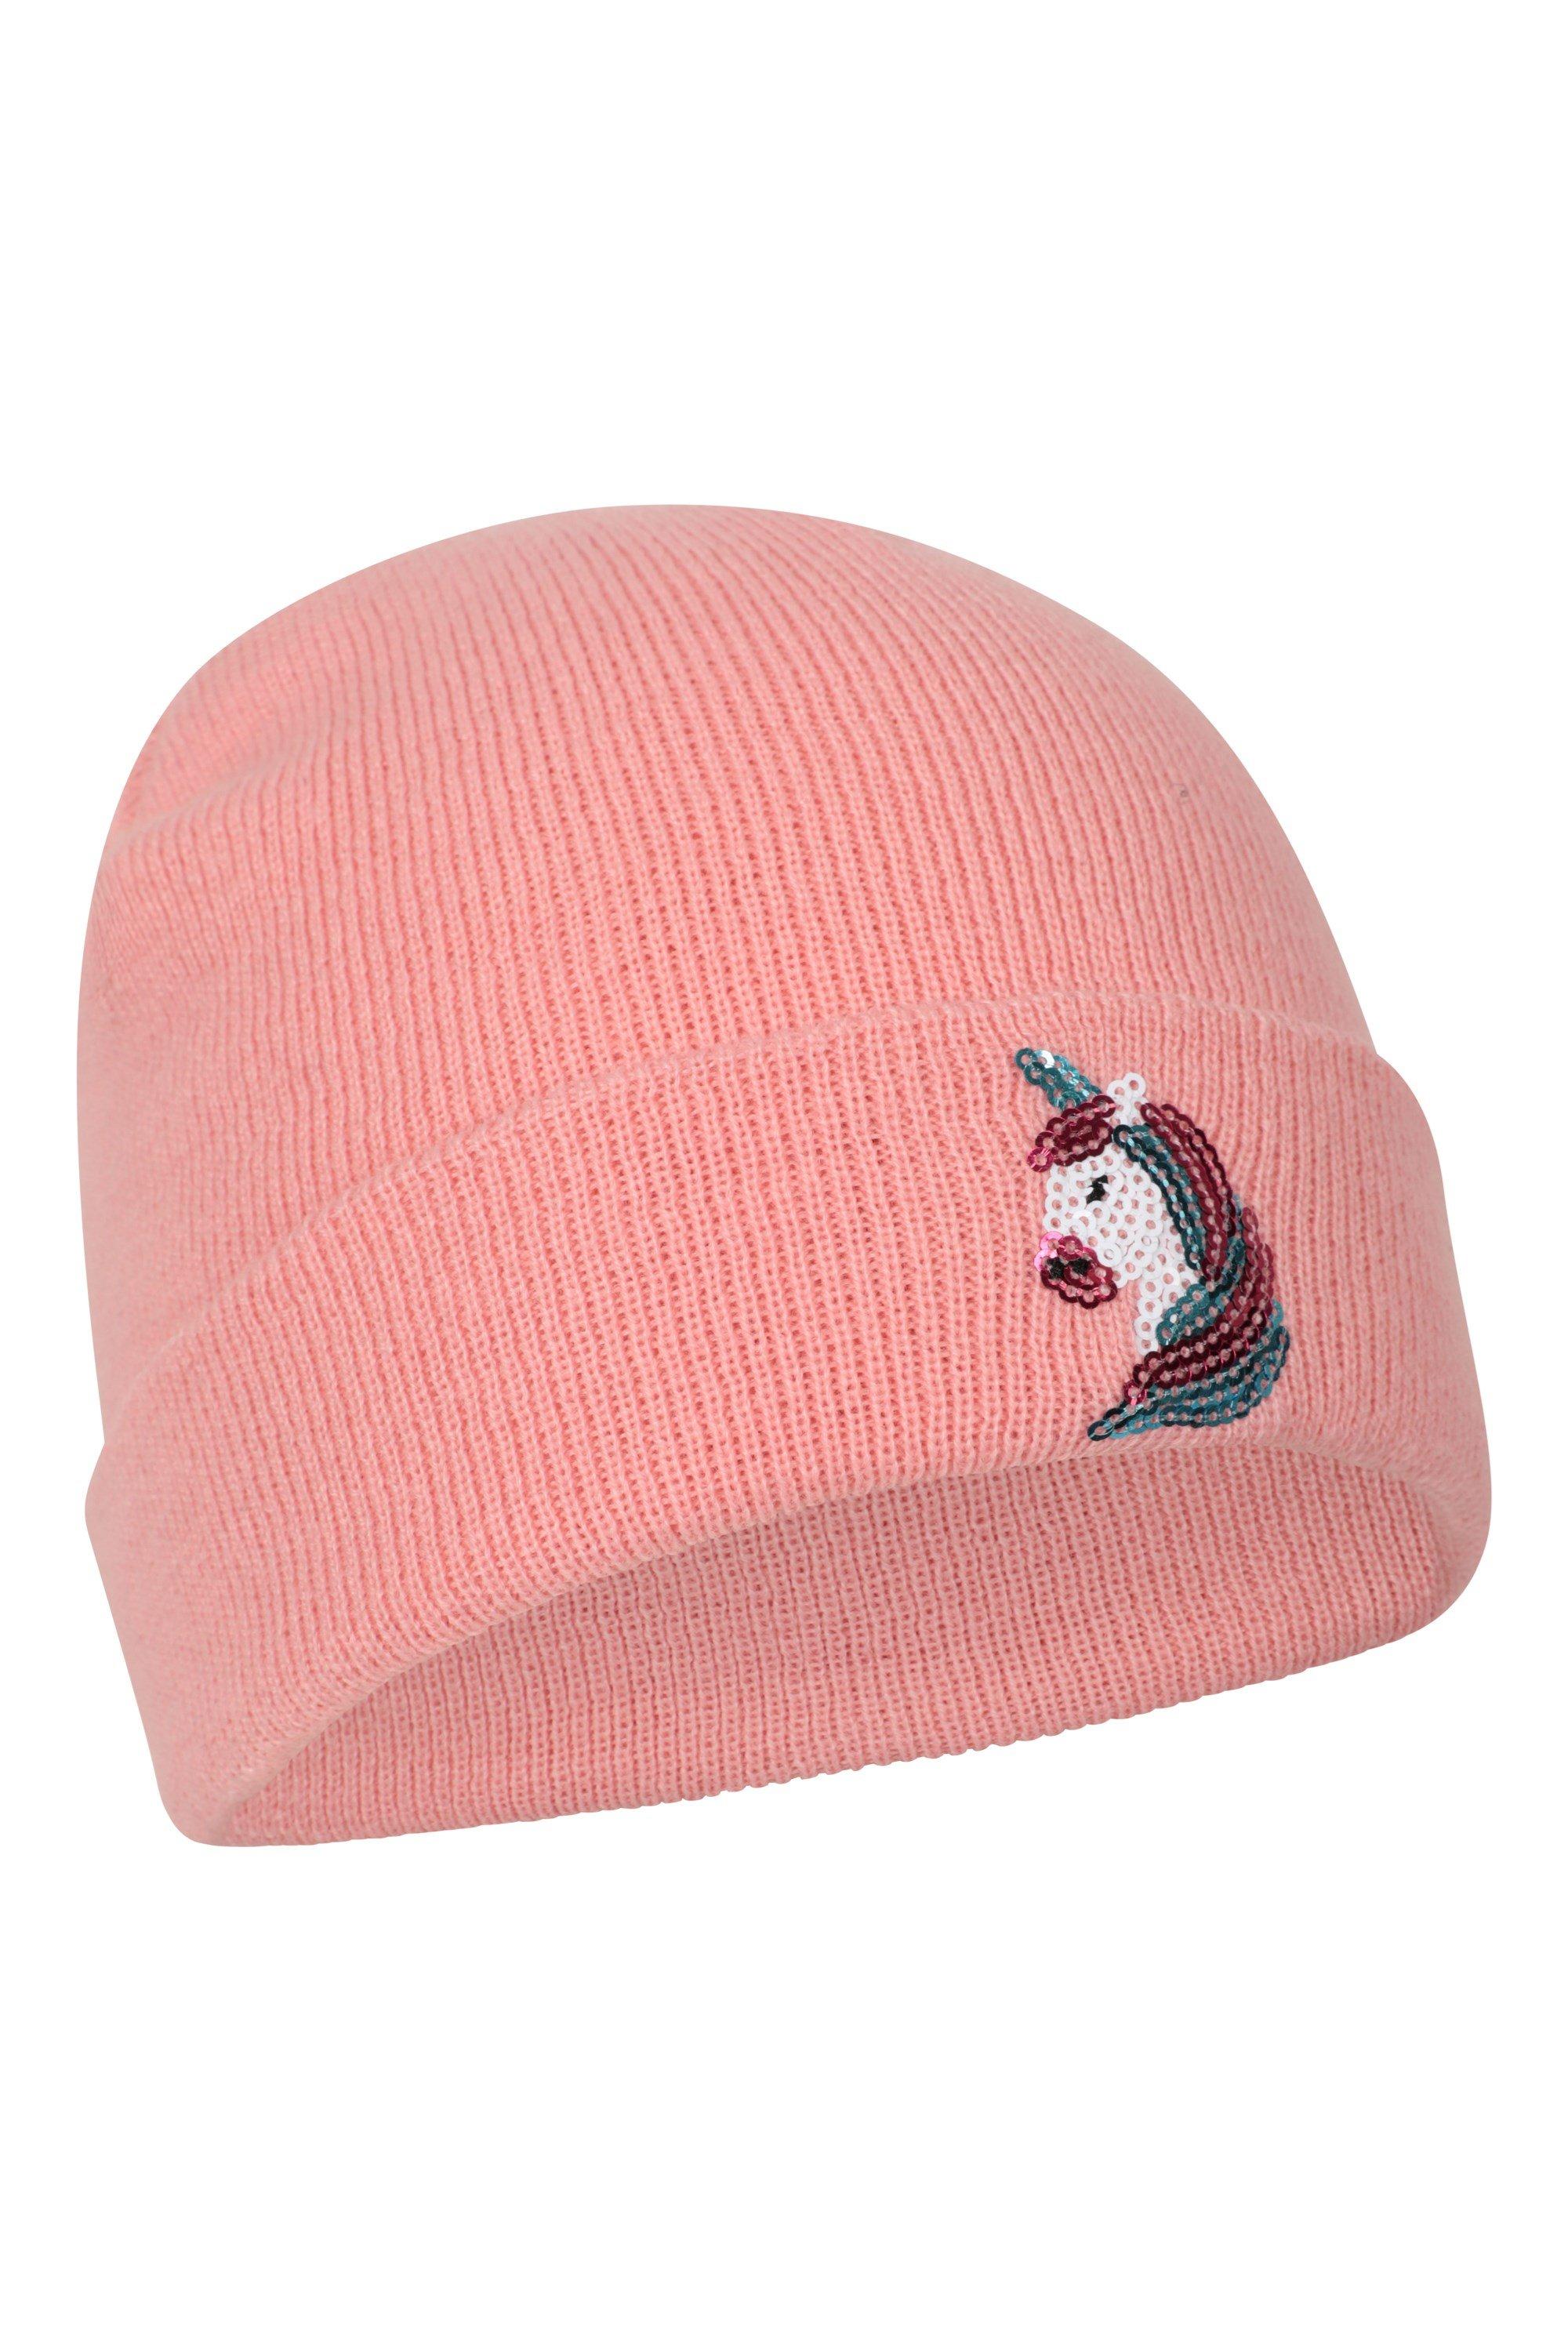 Удобная вязаная теплая шапка-бини с пайетками Mountain Warehouse, розовый